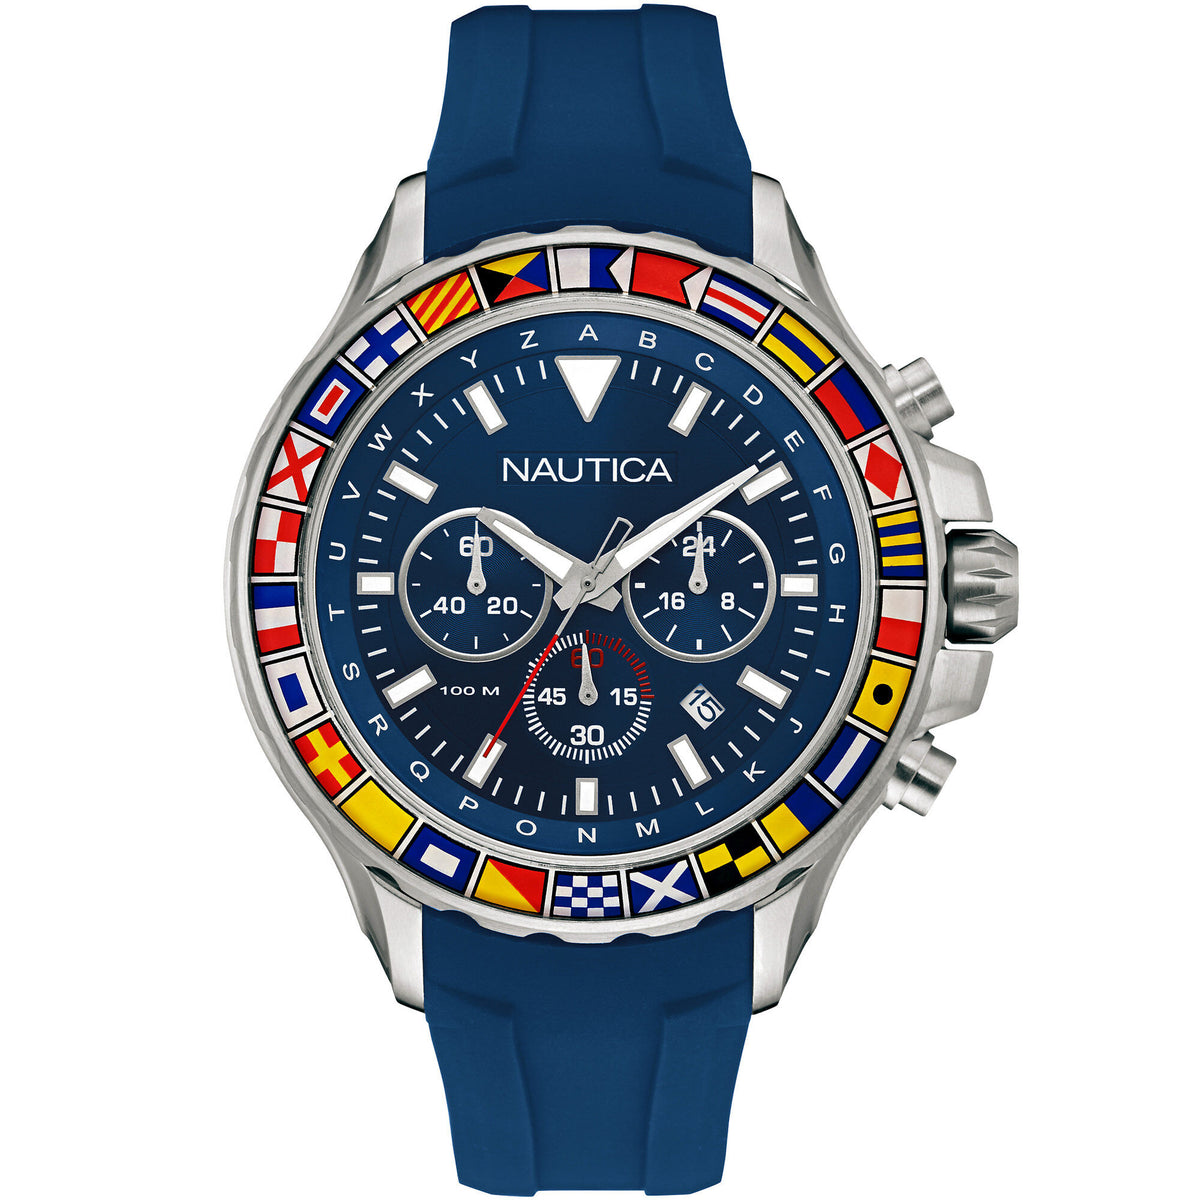 Nautica Nst 1000 Chronograph Sport Watch - Blue Multi